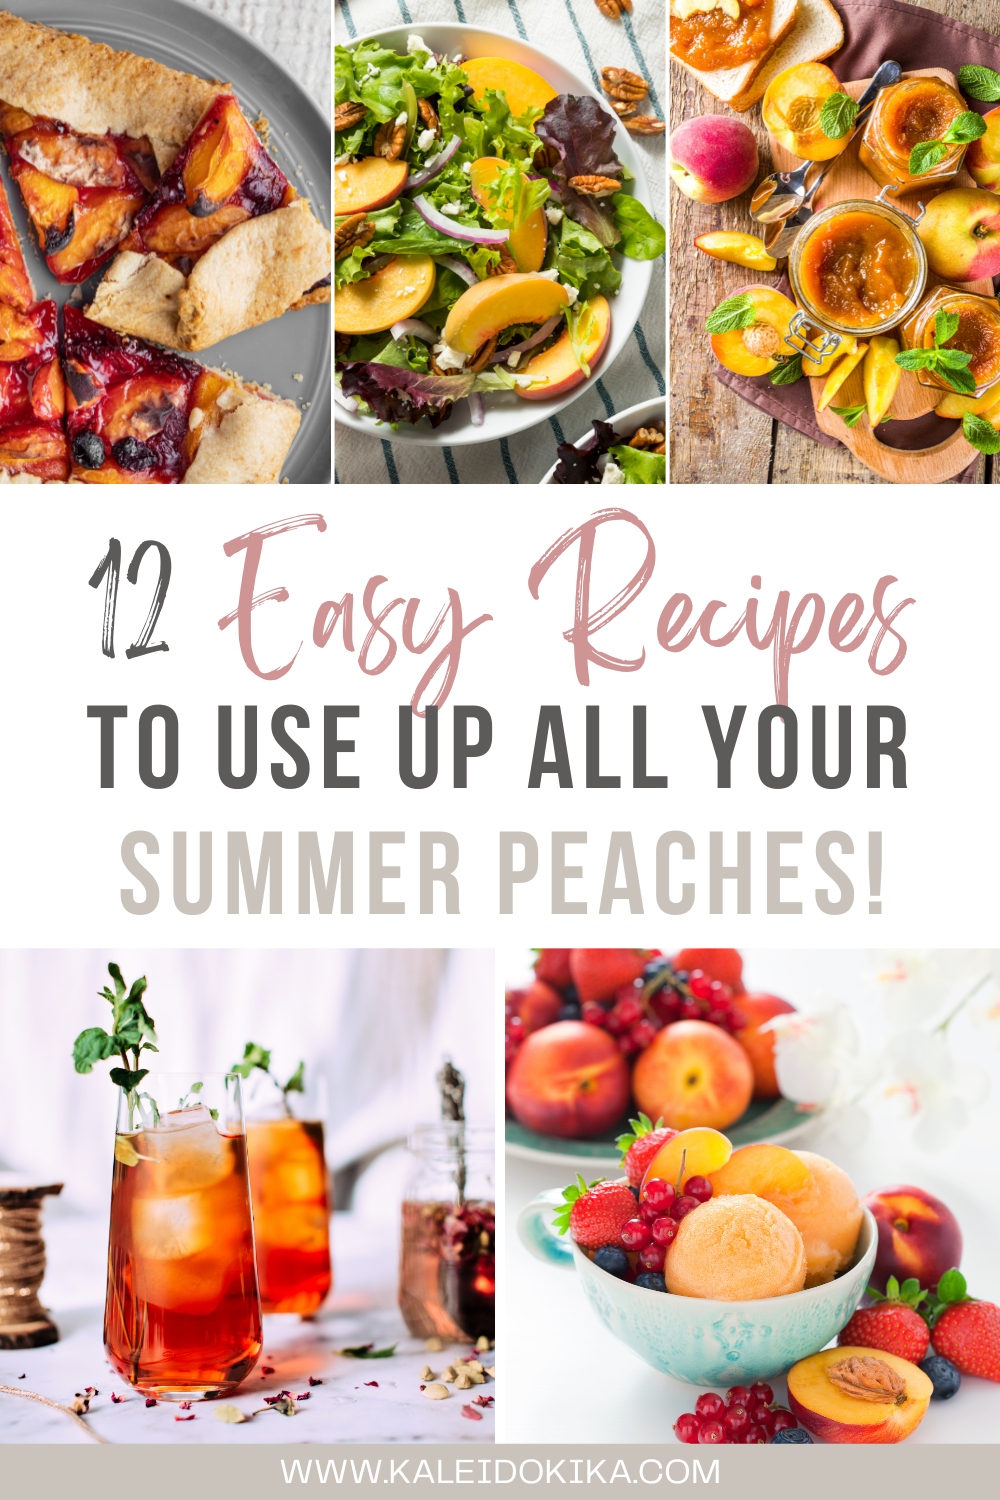 Image showing 12 summer peaches recipe ideas